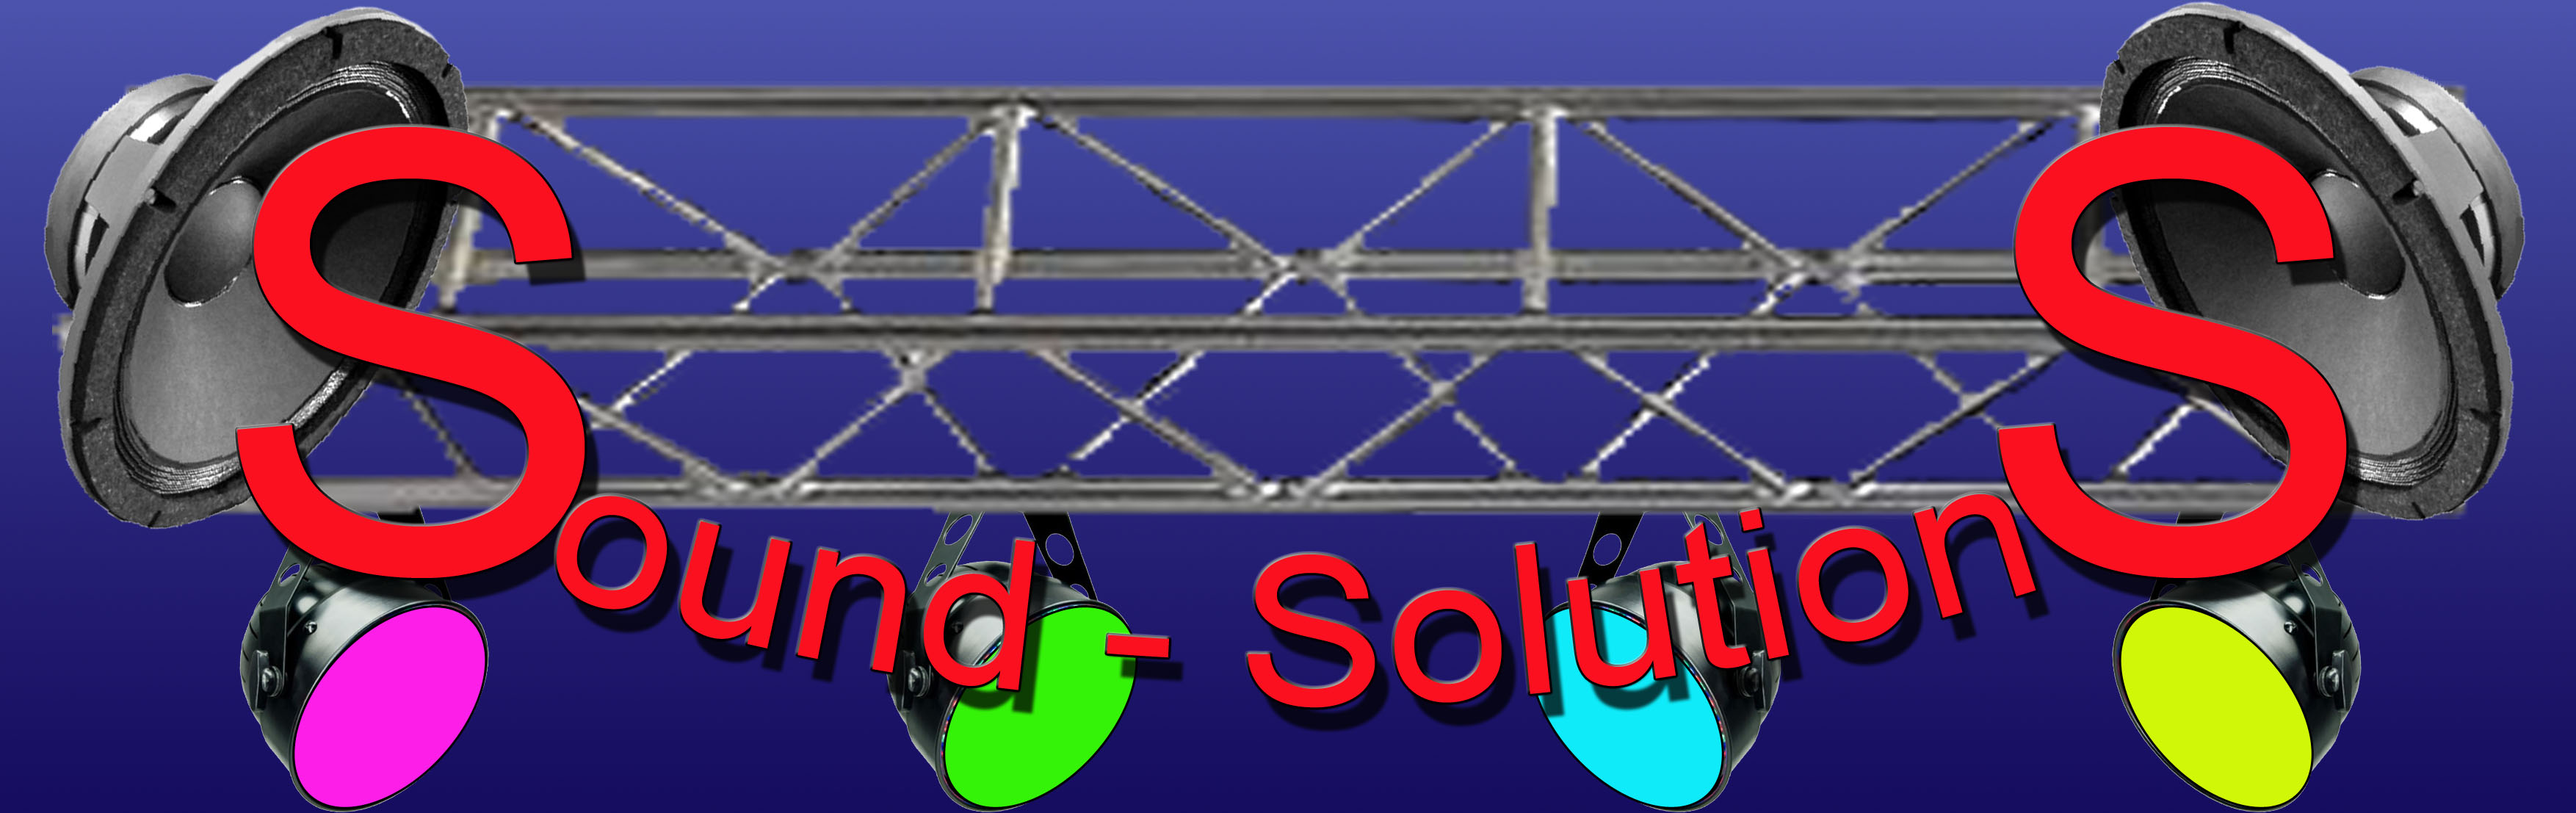 Logo Sound-solutions